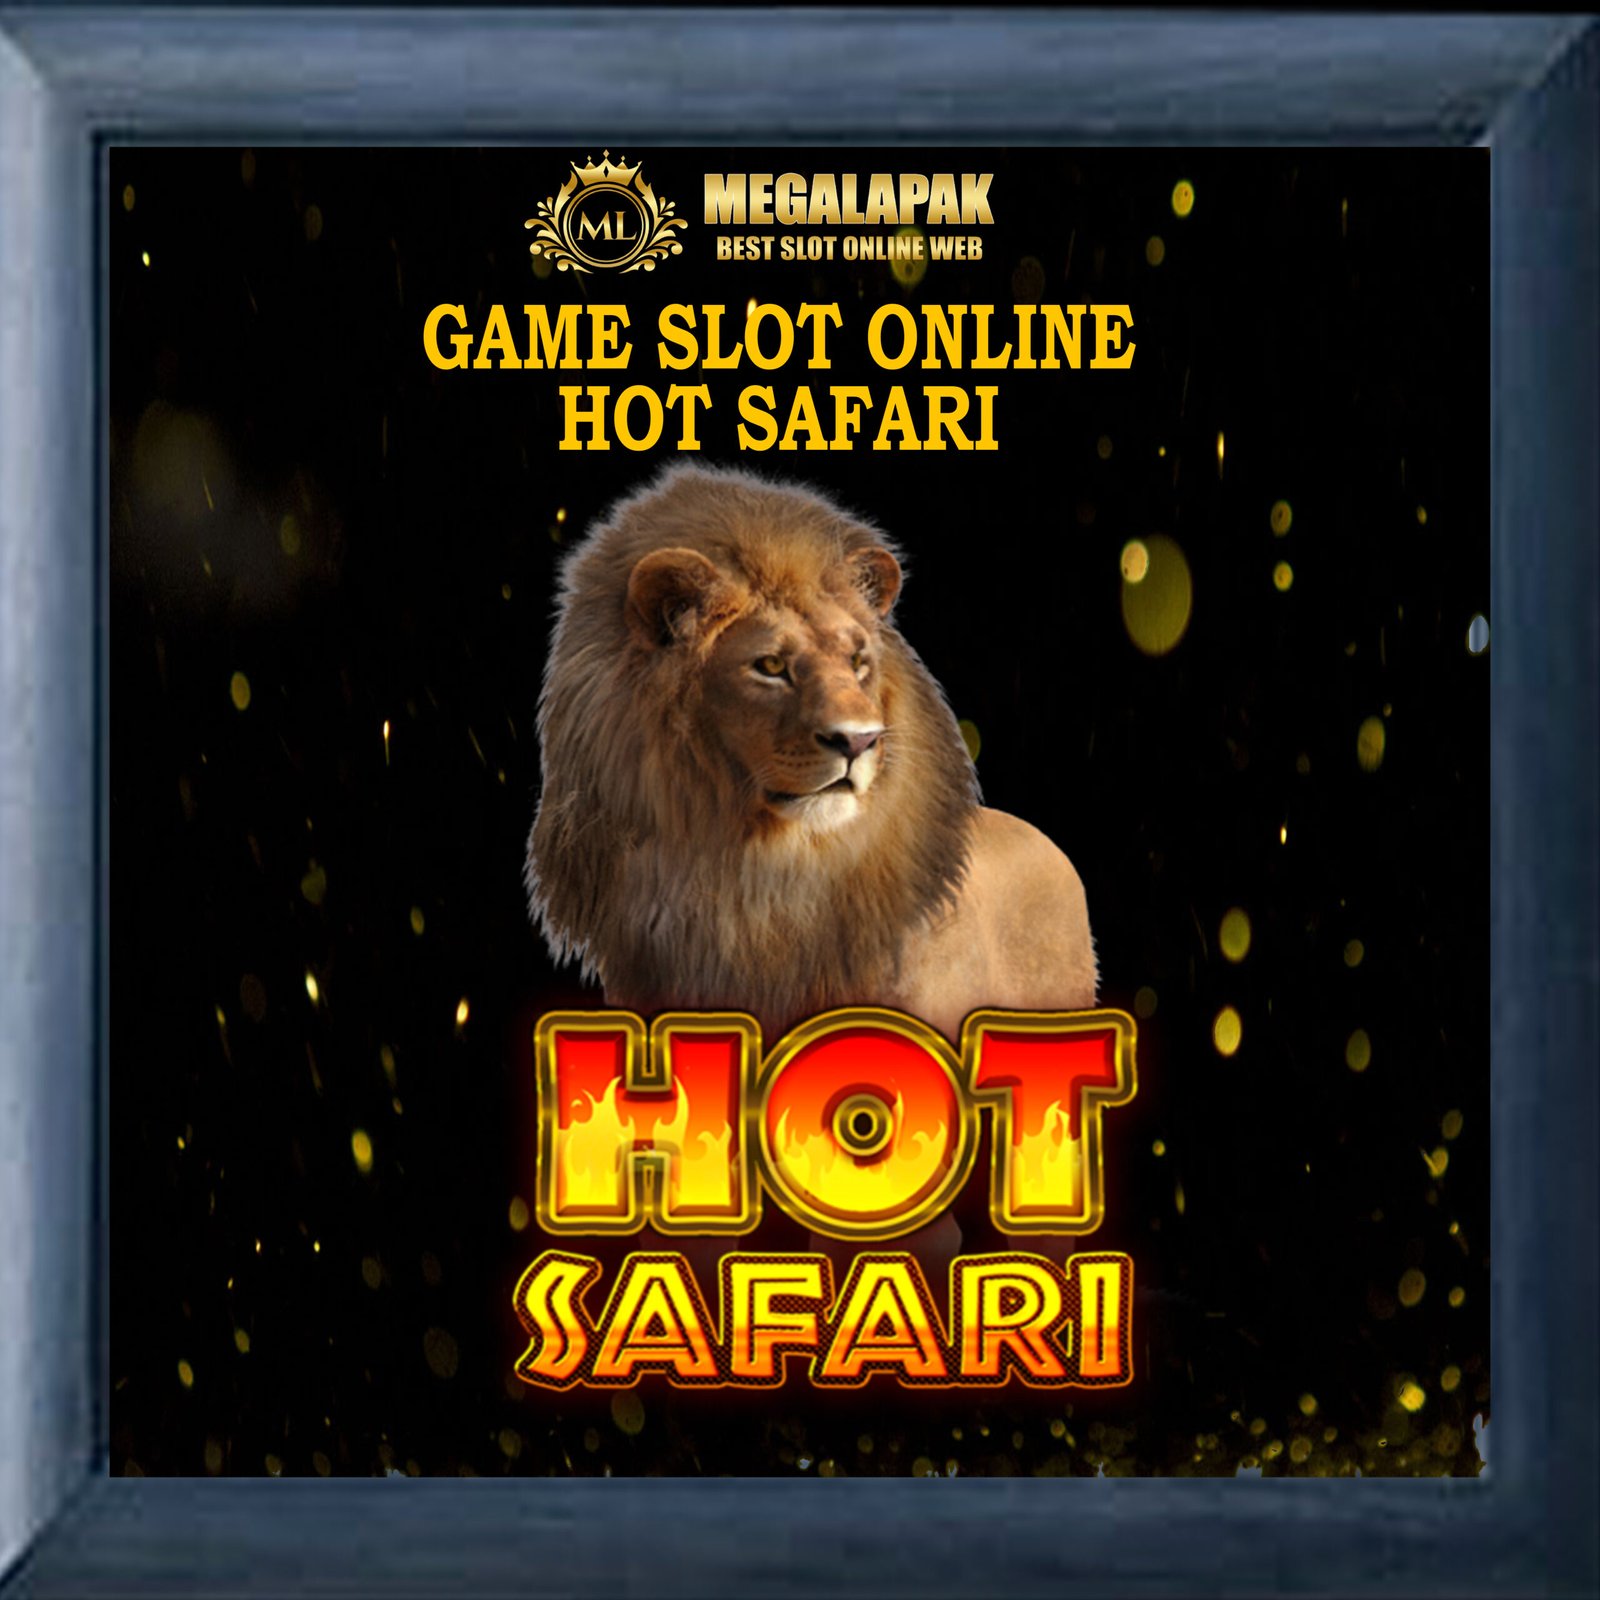 Slot Online Hot Safari Megalapak